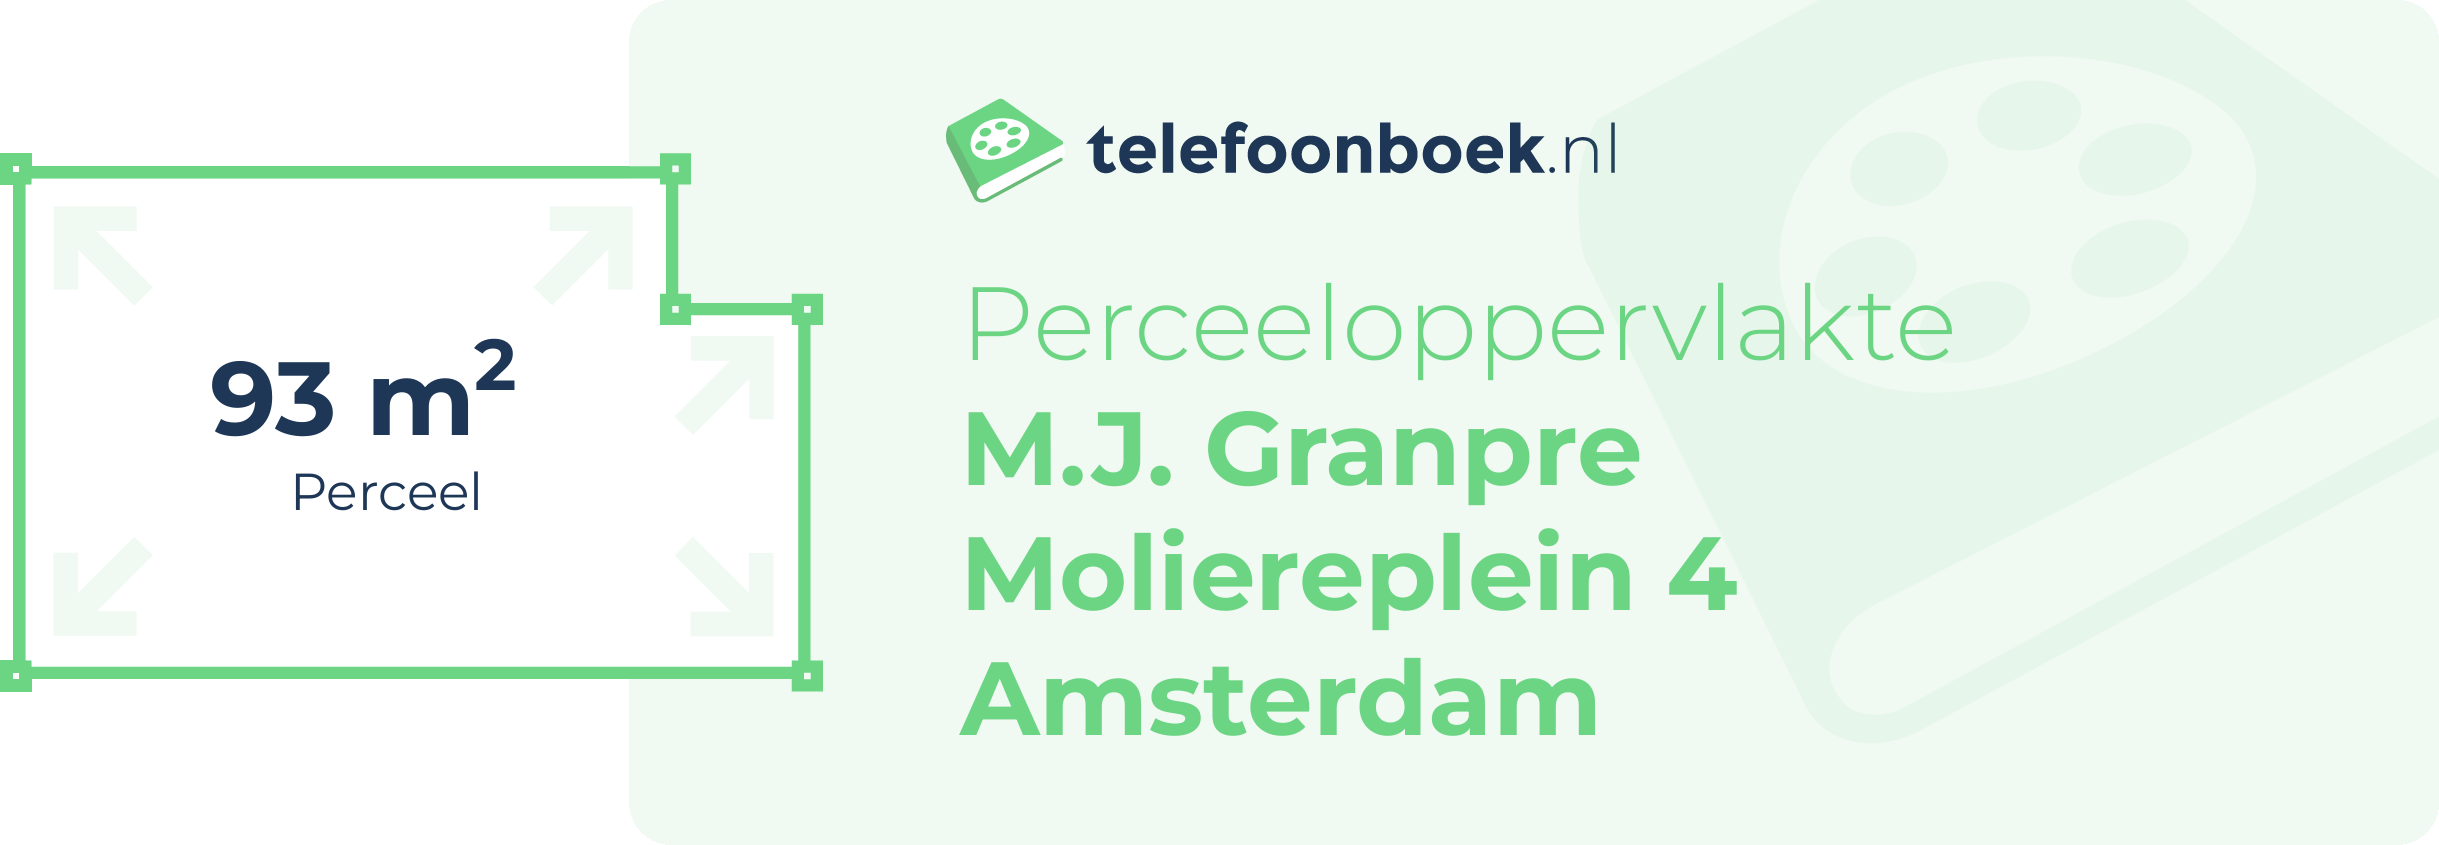 Perceeloppervlakte M.J. Granpre Moliereplein 4 Amsterdam